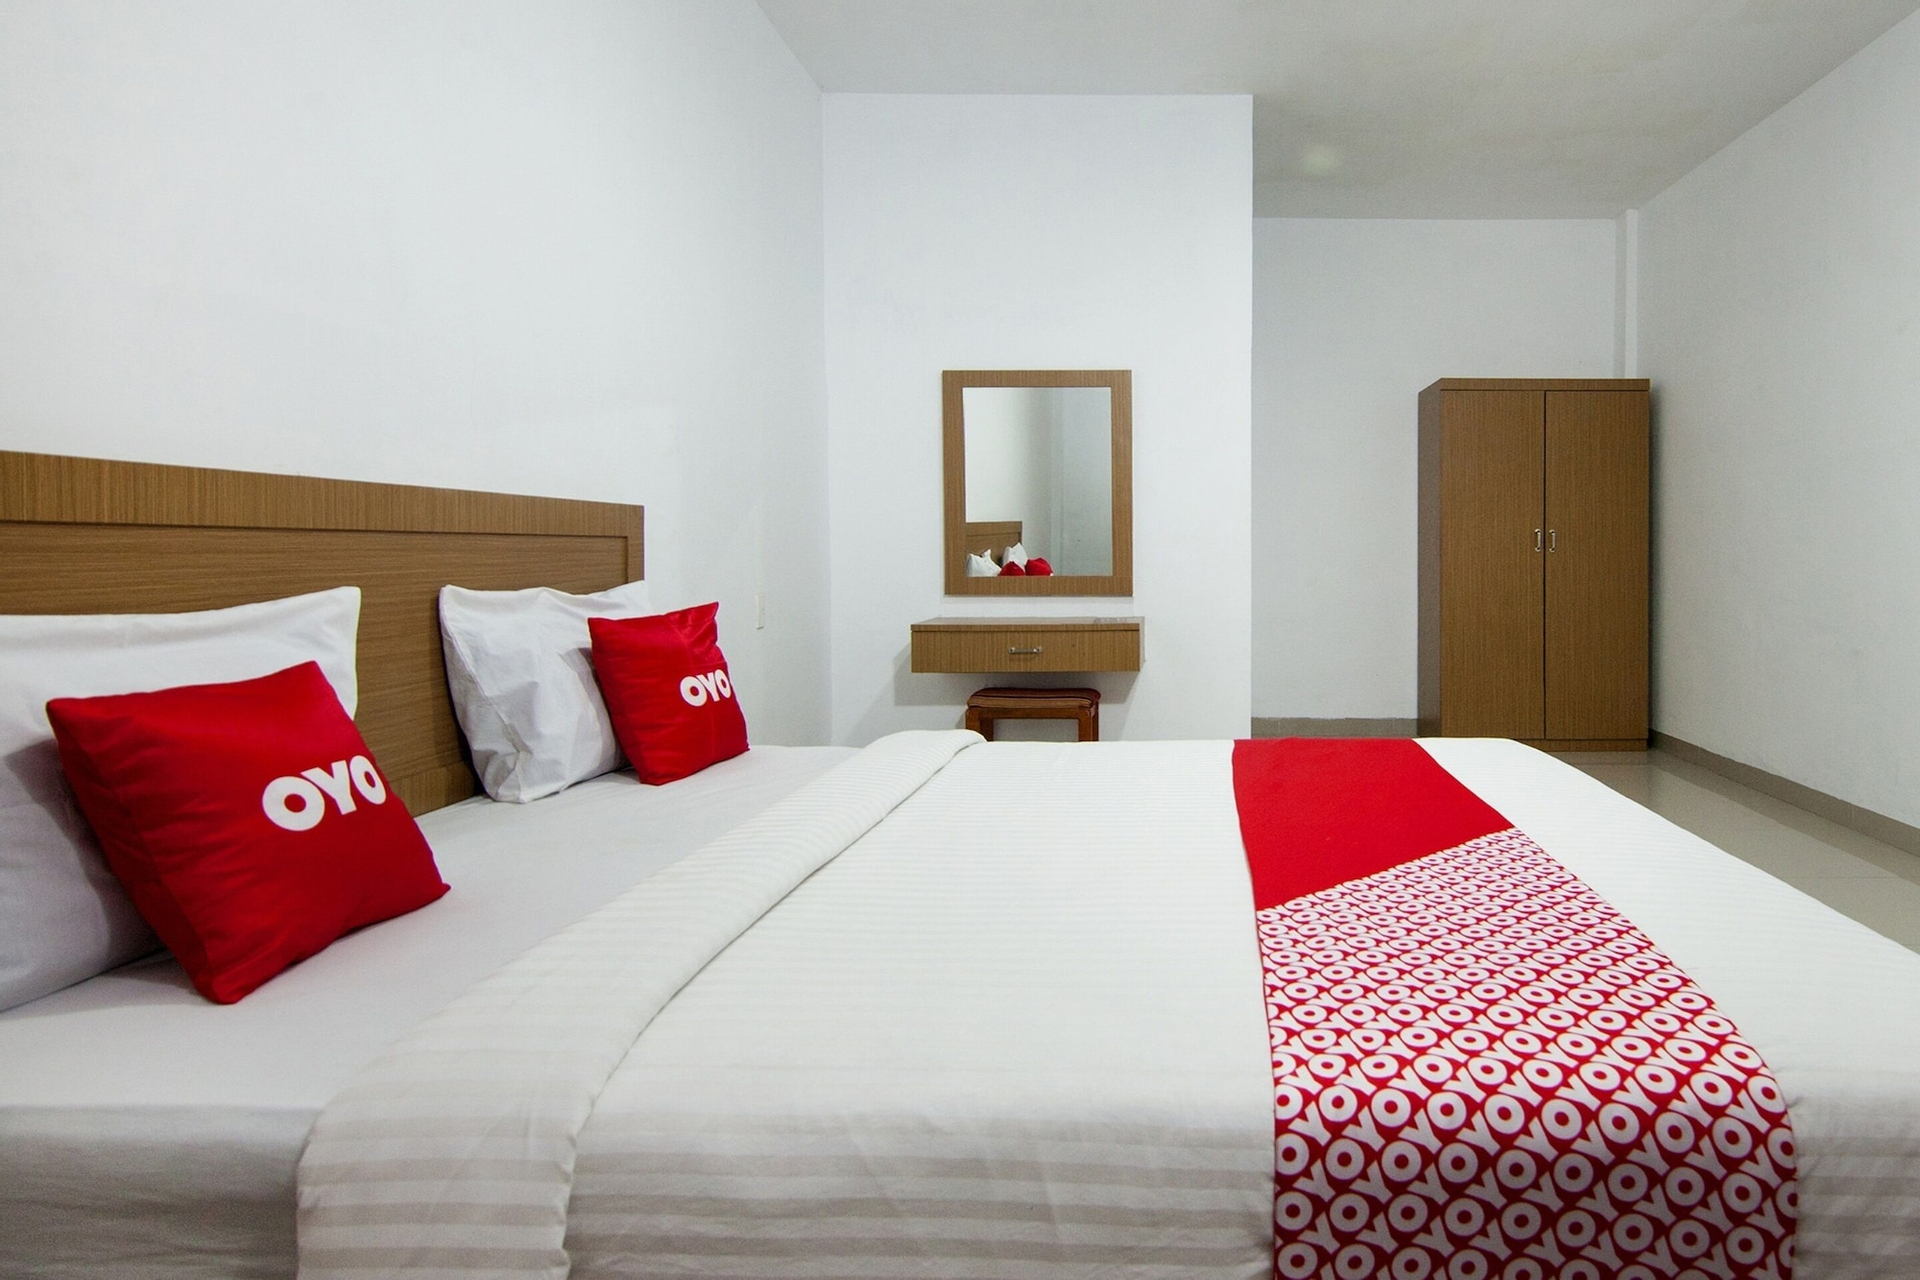 Bedroom 3, OYO 2208 Thyesza Hotel (tutup sementara), Samosir